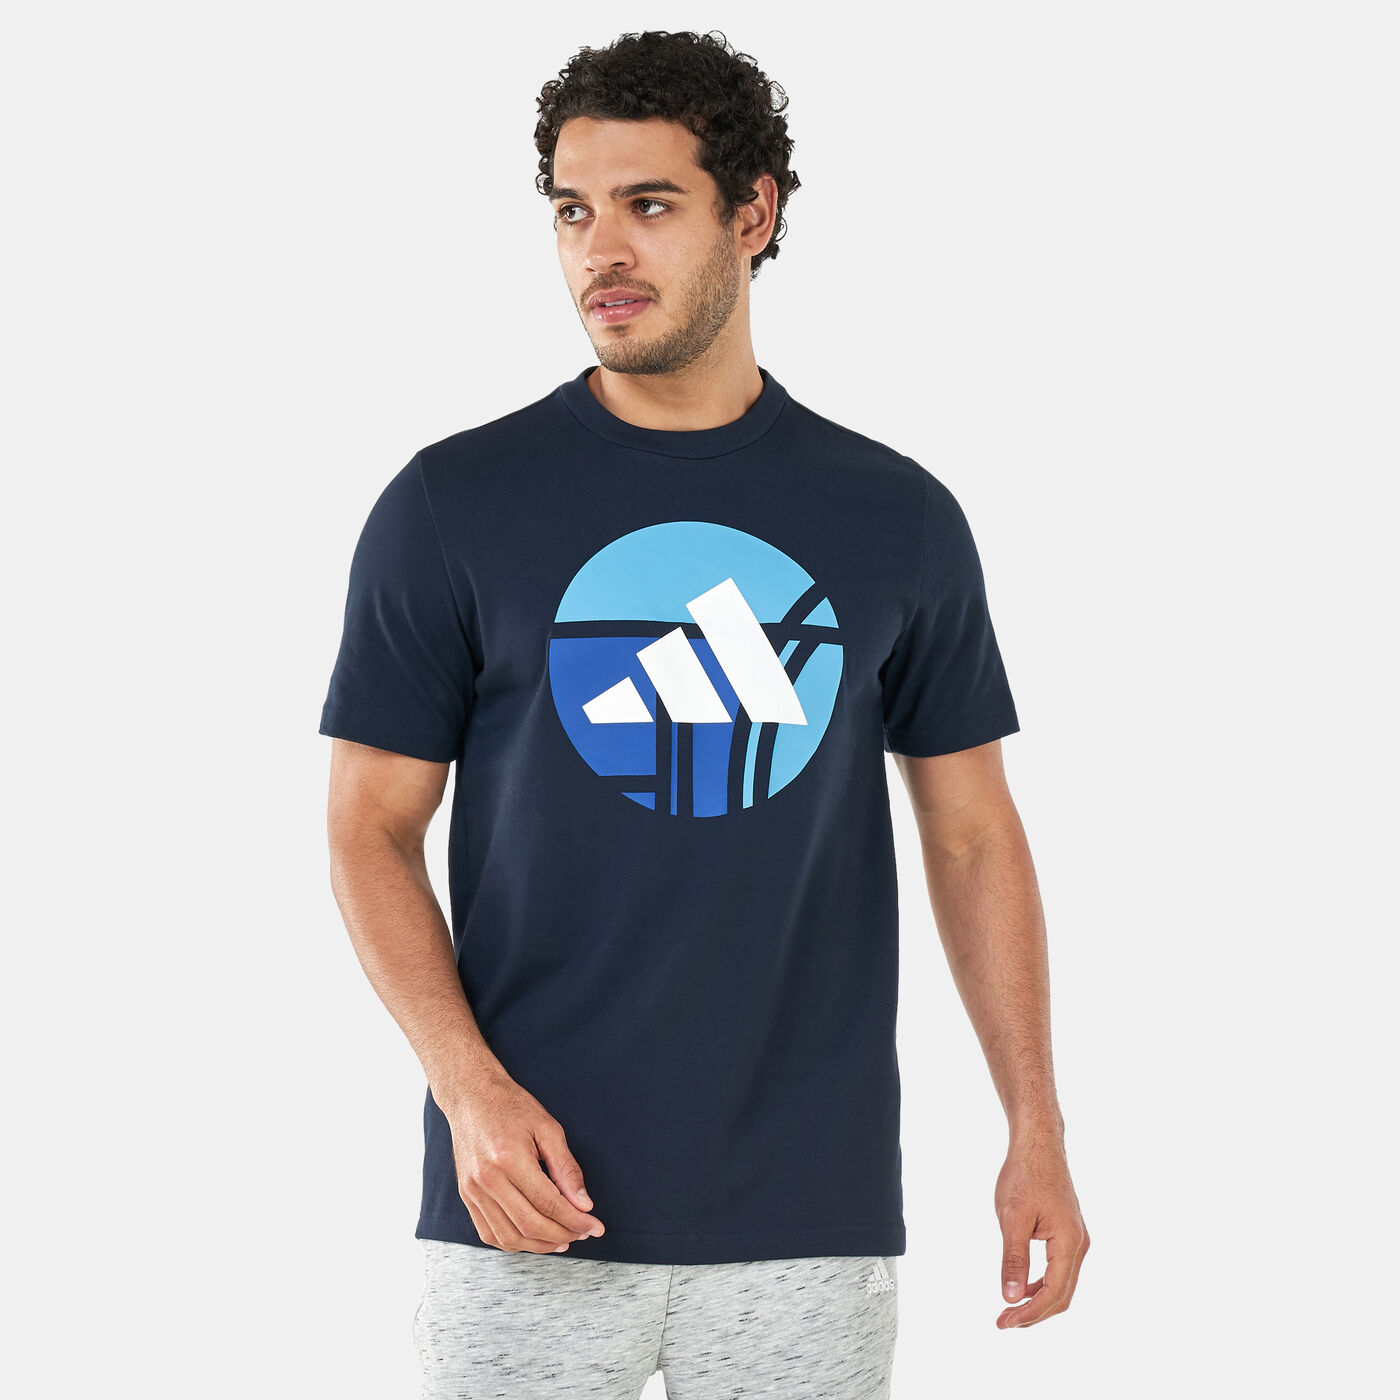 Men's Energetic 3Bar Graphic T-Shirt